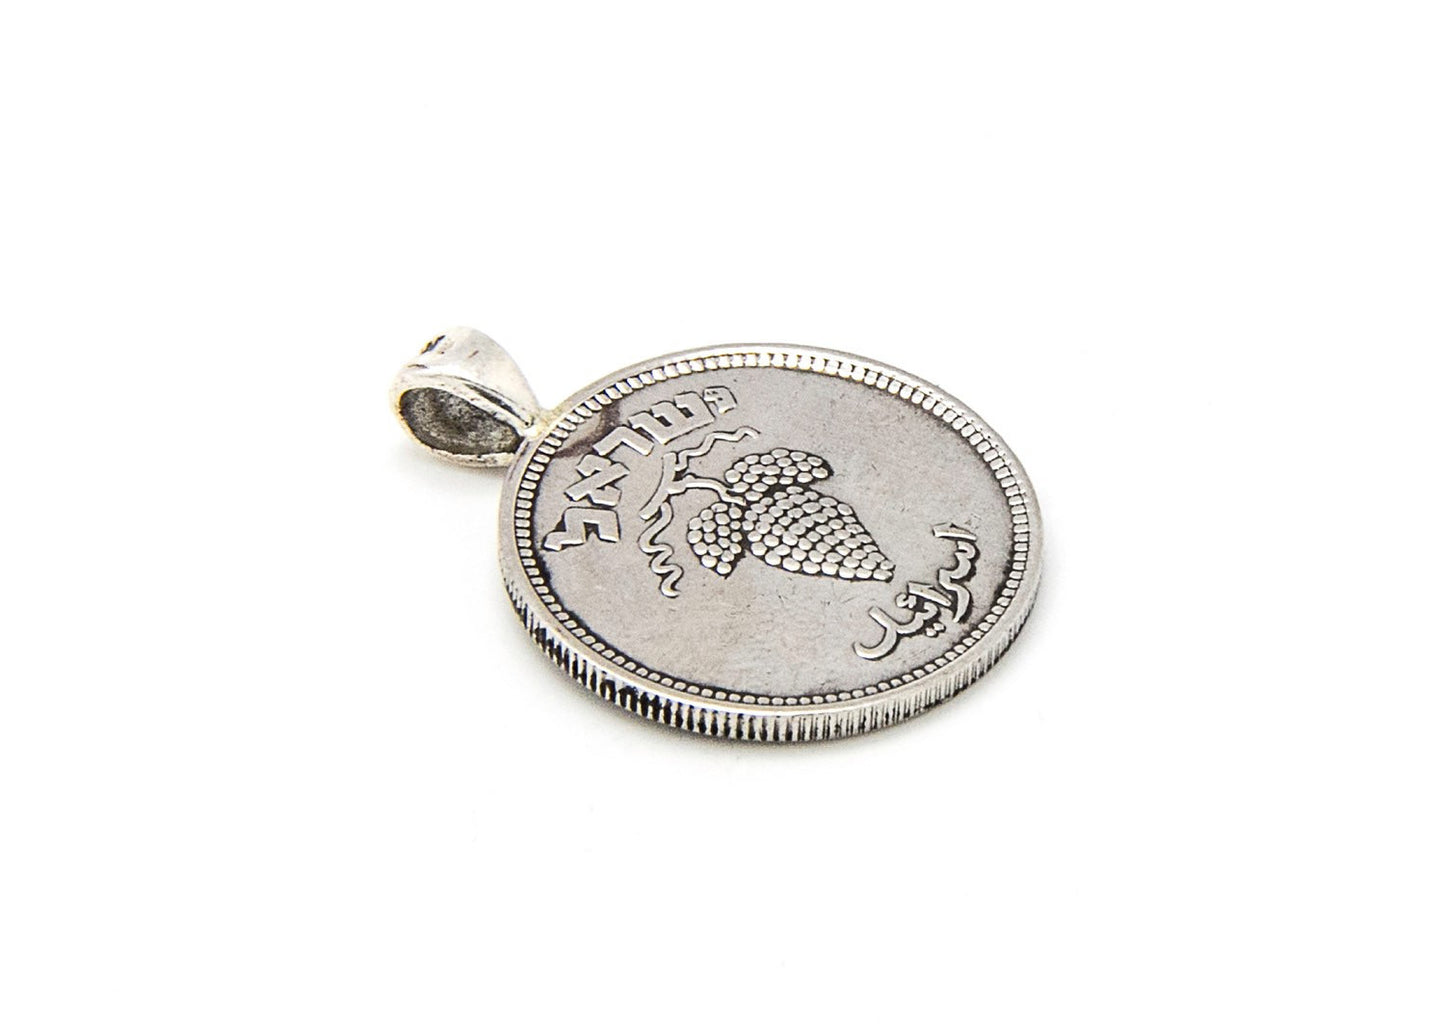 Pruta Coin, Israeli Necklace, Hebrew Coin, Israeli Pruta, Silver Coin Necklace, 925 Silver Necklace, Israel Coin Necklace, Coin Chain